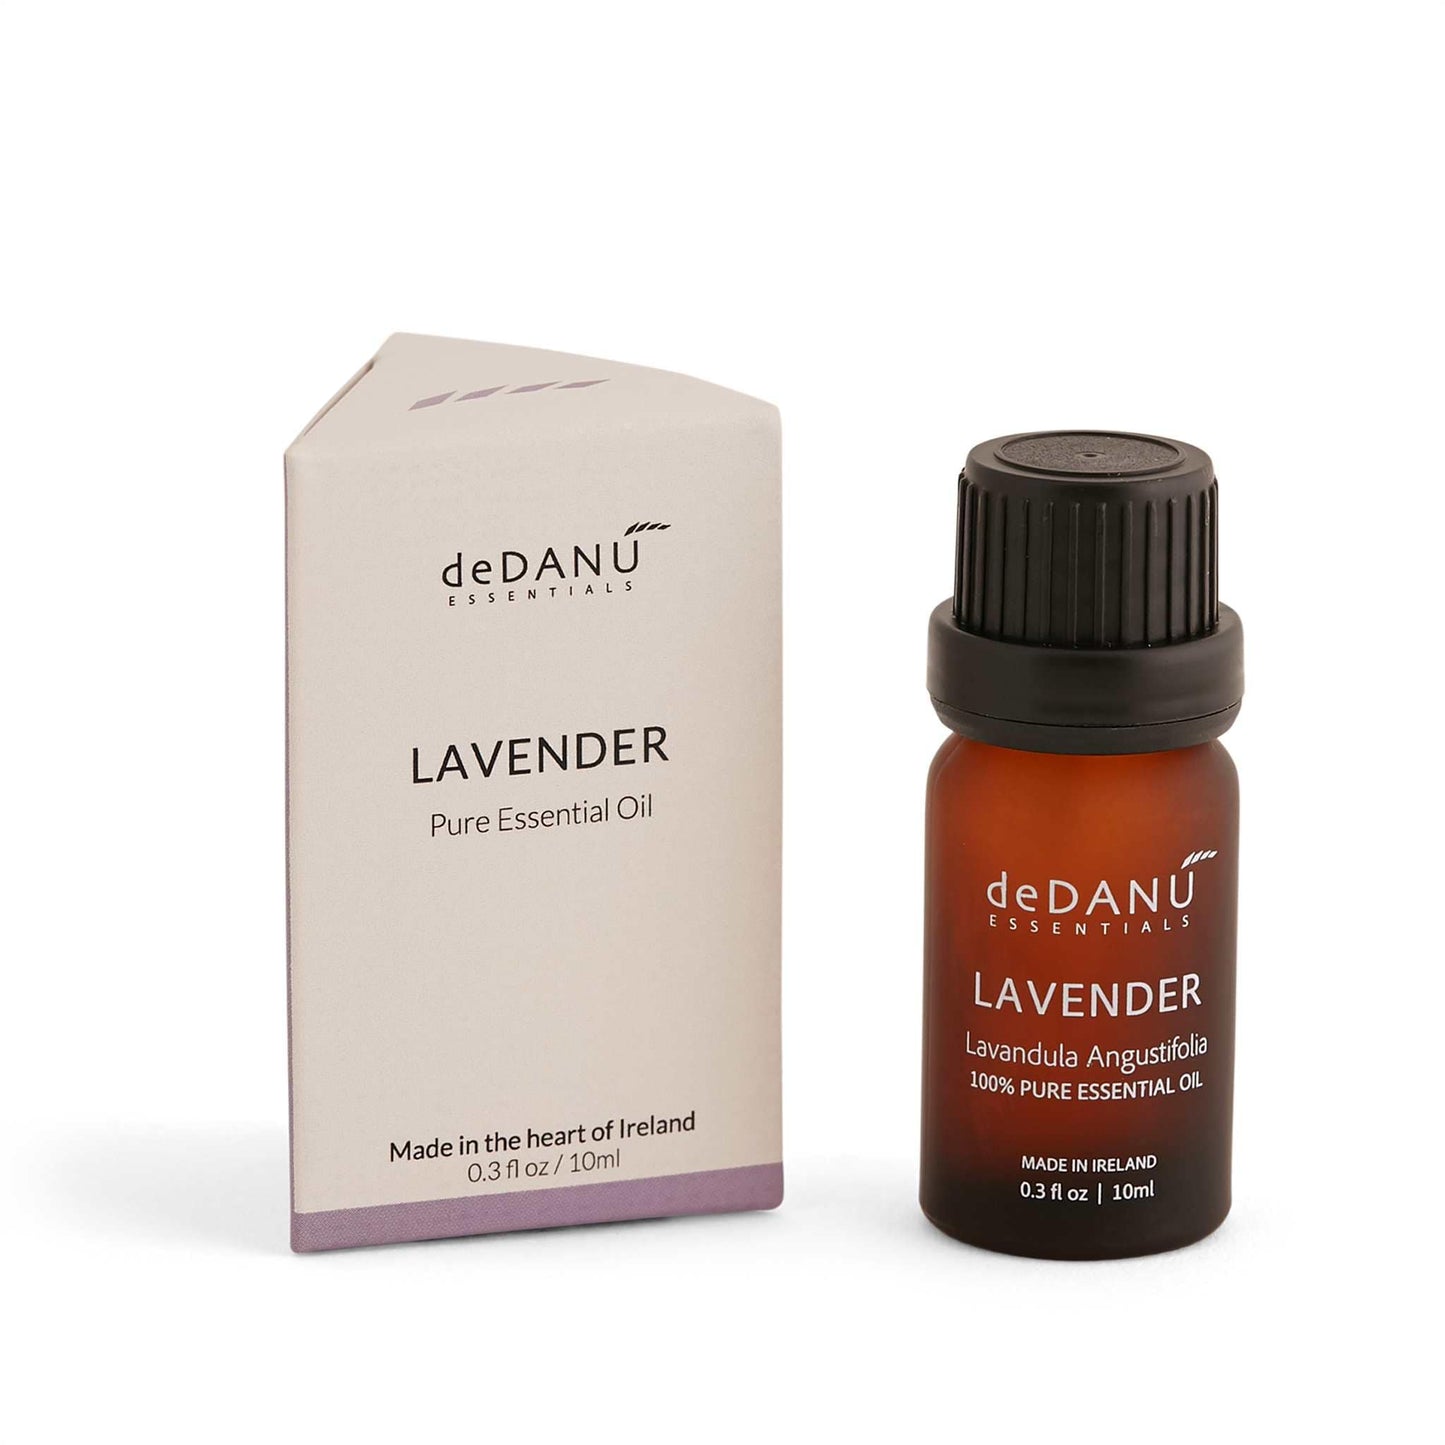 deDANU Essential Oil Lavender Essential Oil 10ml – deDANÚ